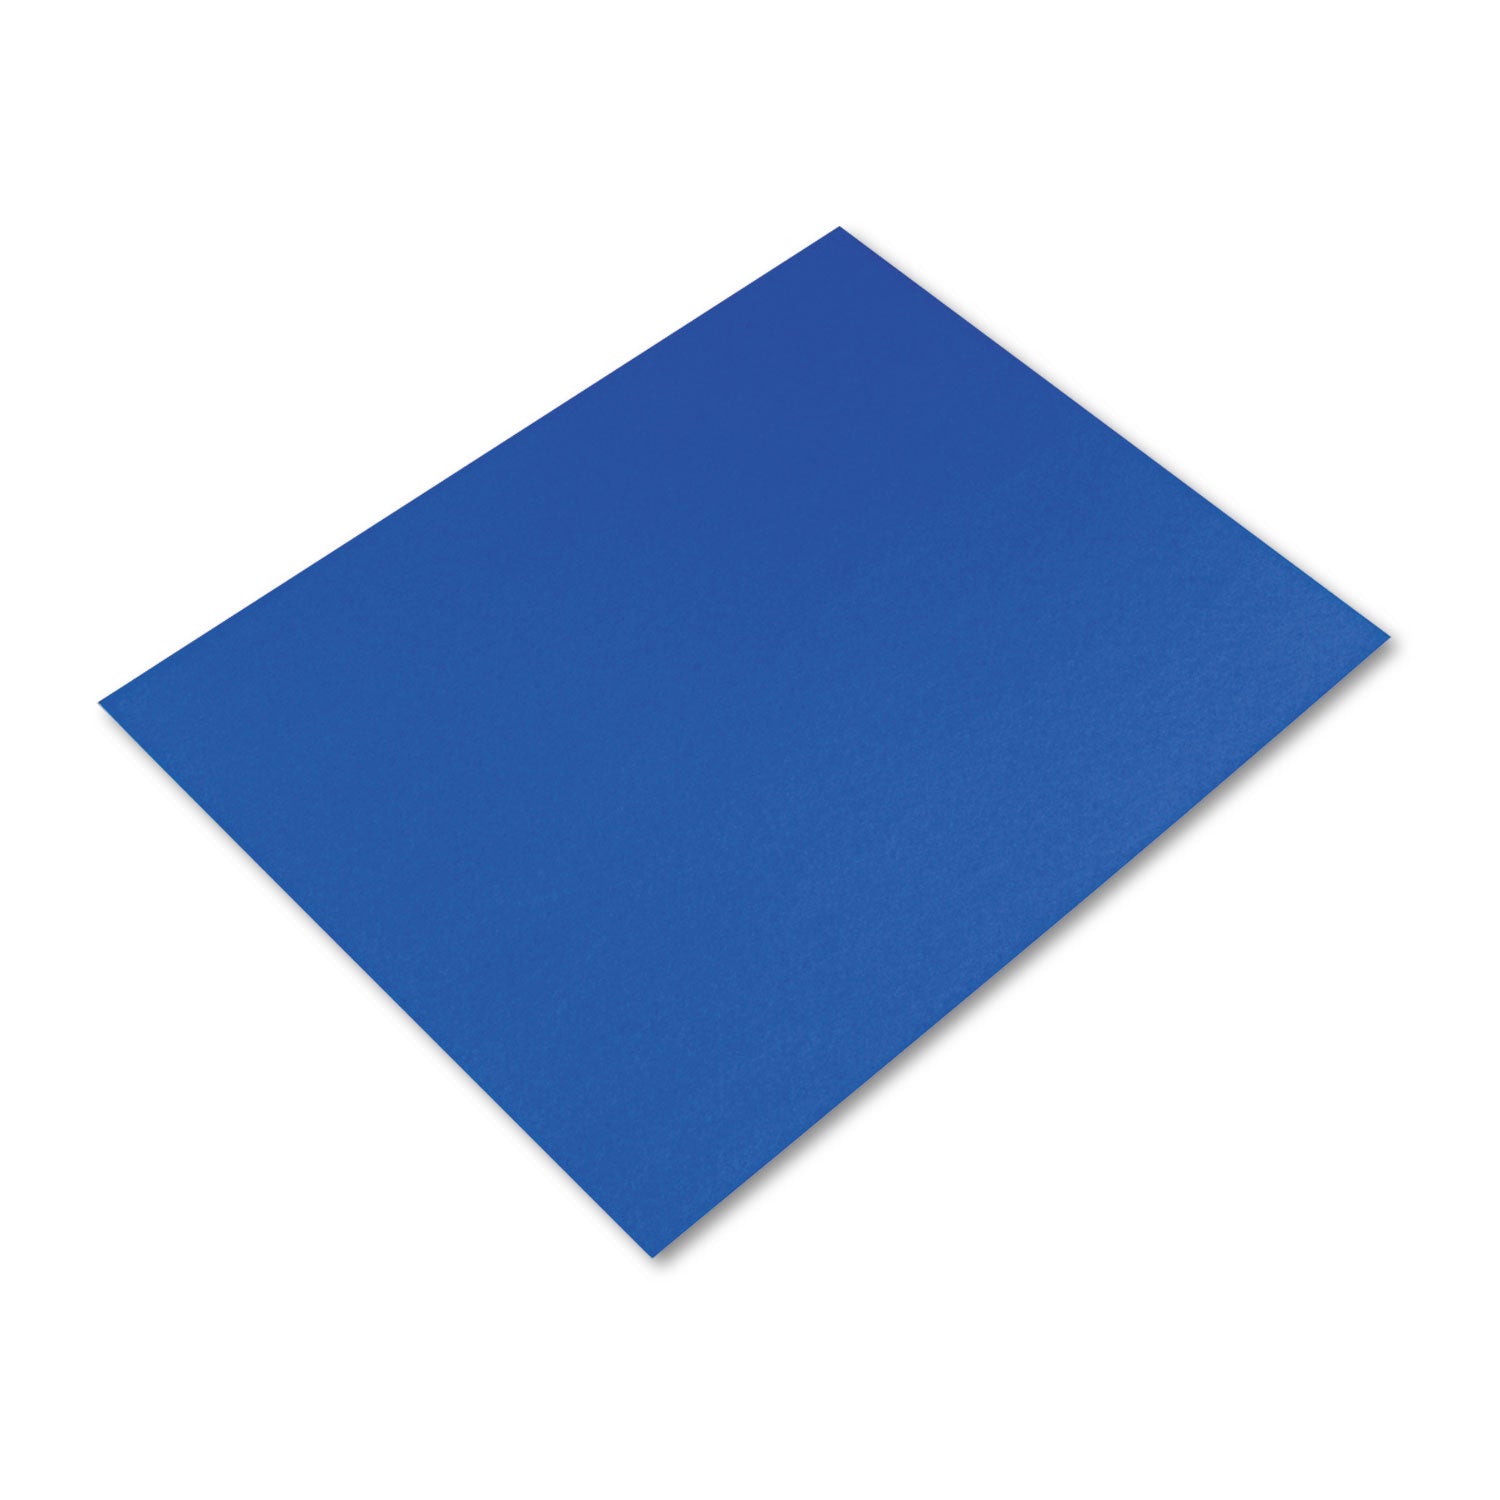 Four-Ply Railroad Board, 22 x 28, Dark Blue, 25/Carton - 